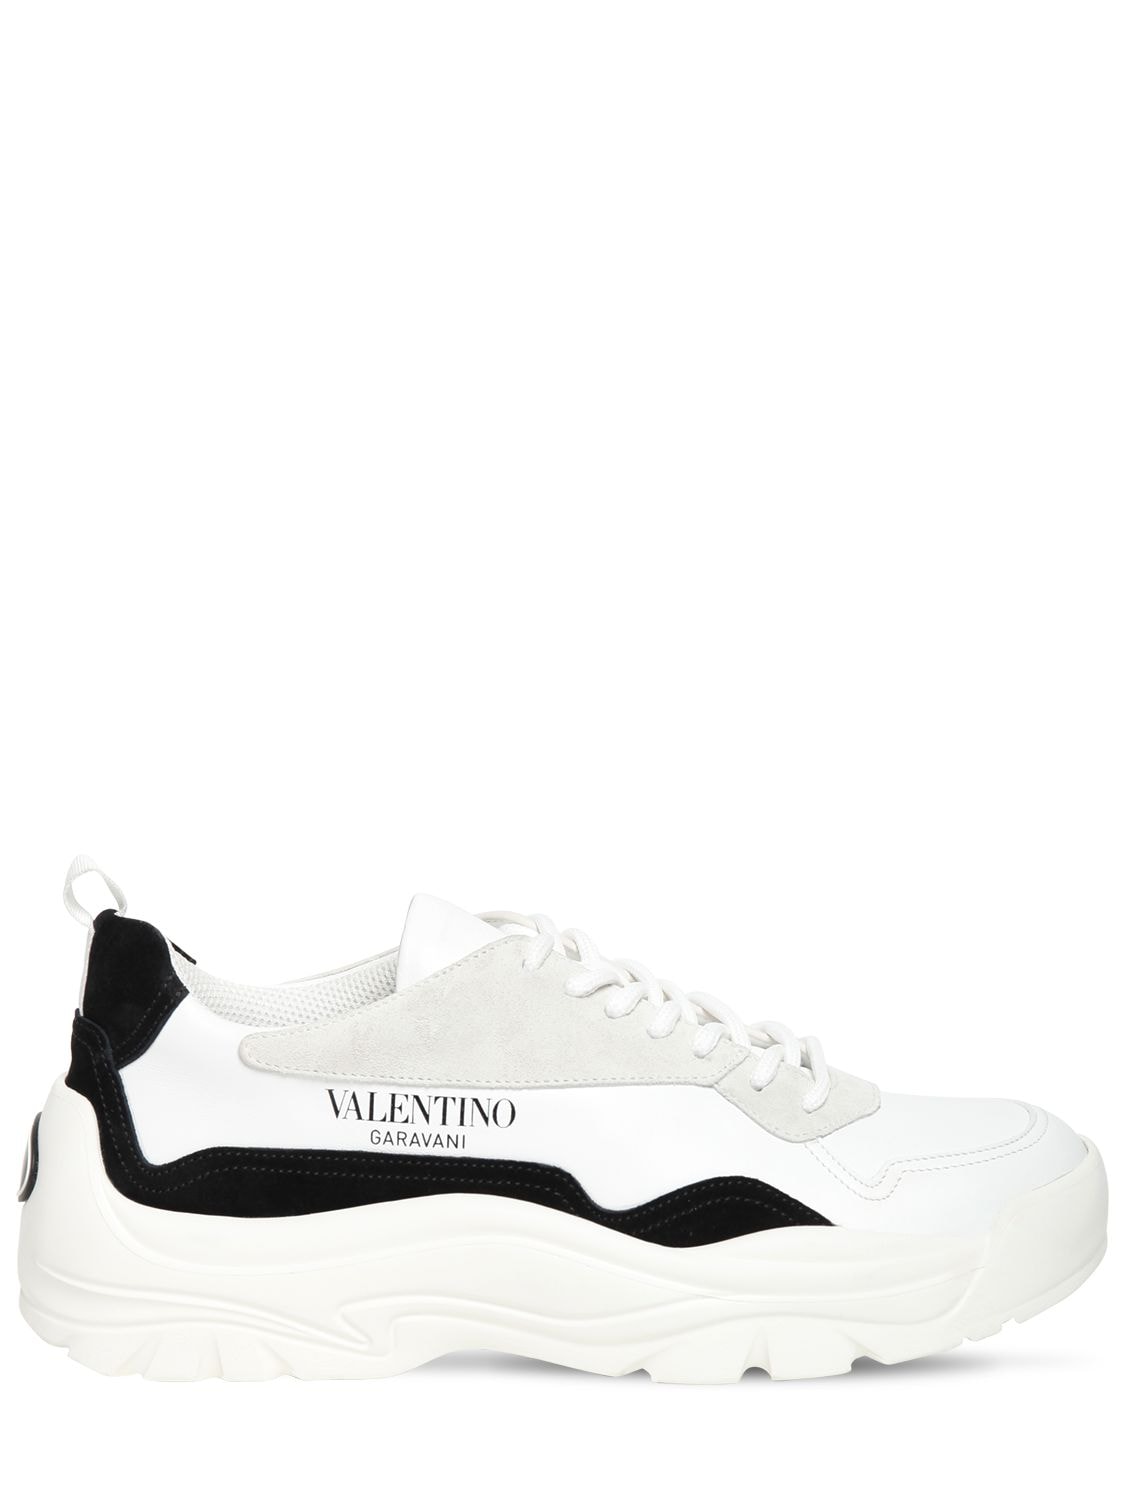 Valentino Garavani Gum Boy Leather & Suede Low Top Sneakers In White,black